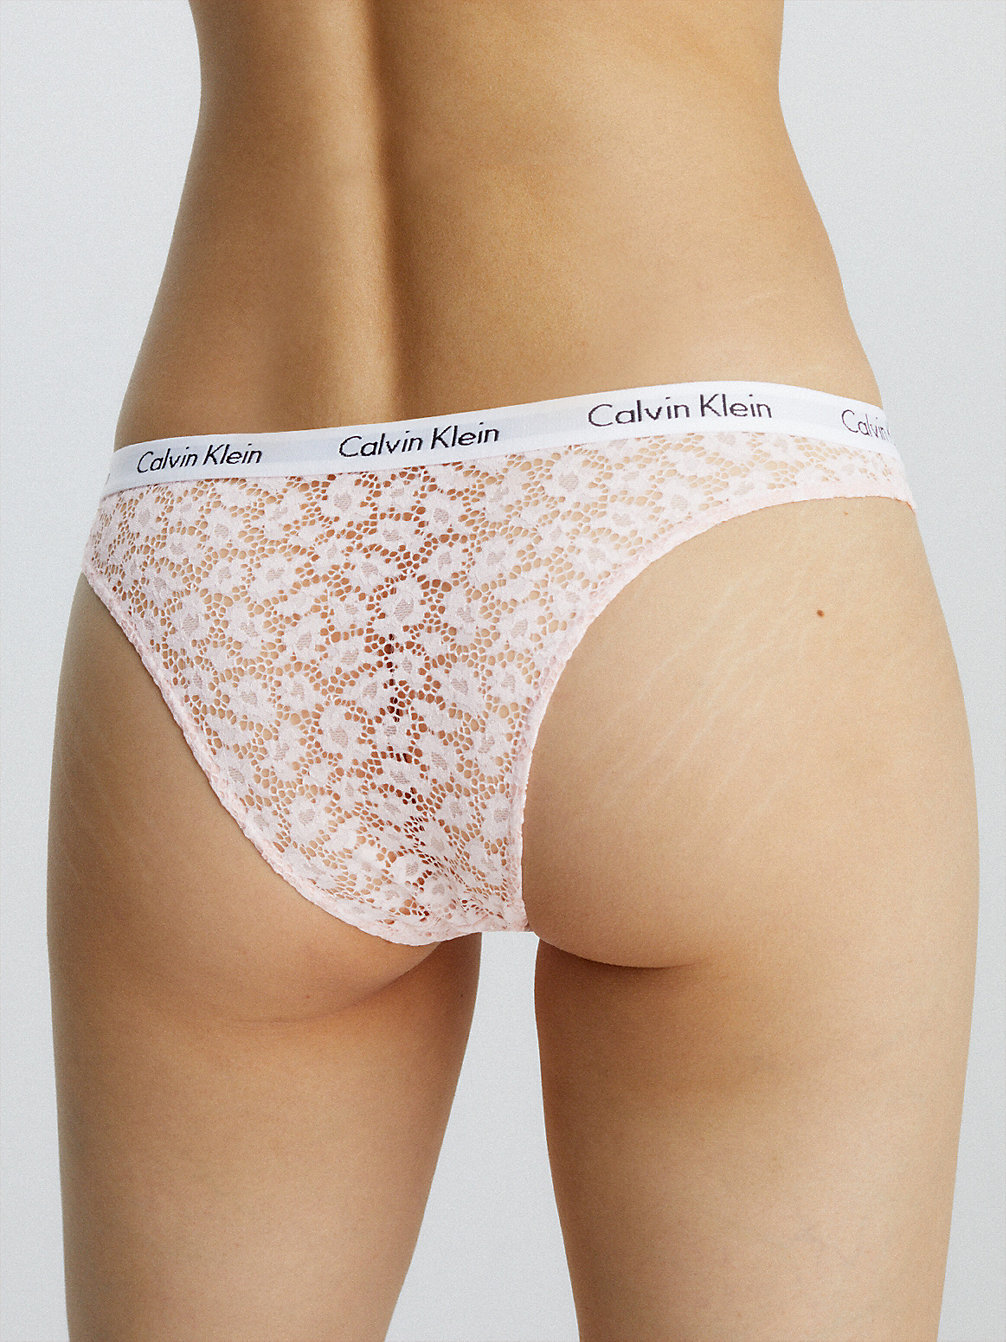 NYMPHS THIGH Brazilian Slip - Carousel undefined dames Calvin Klein